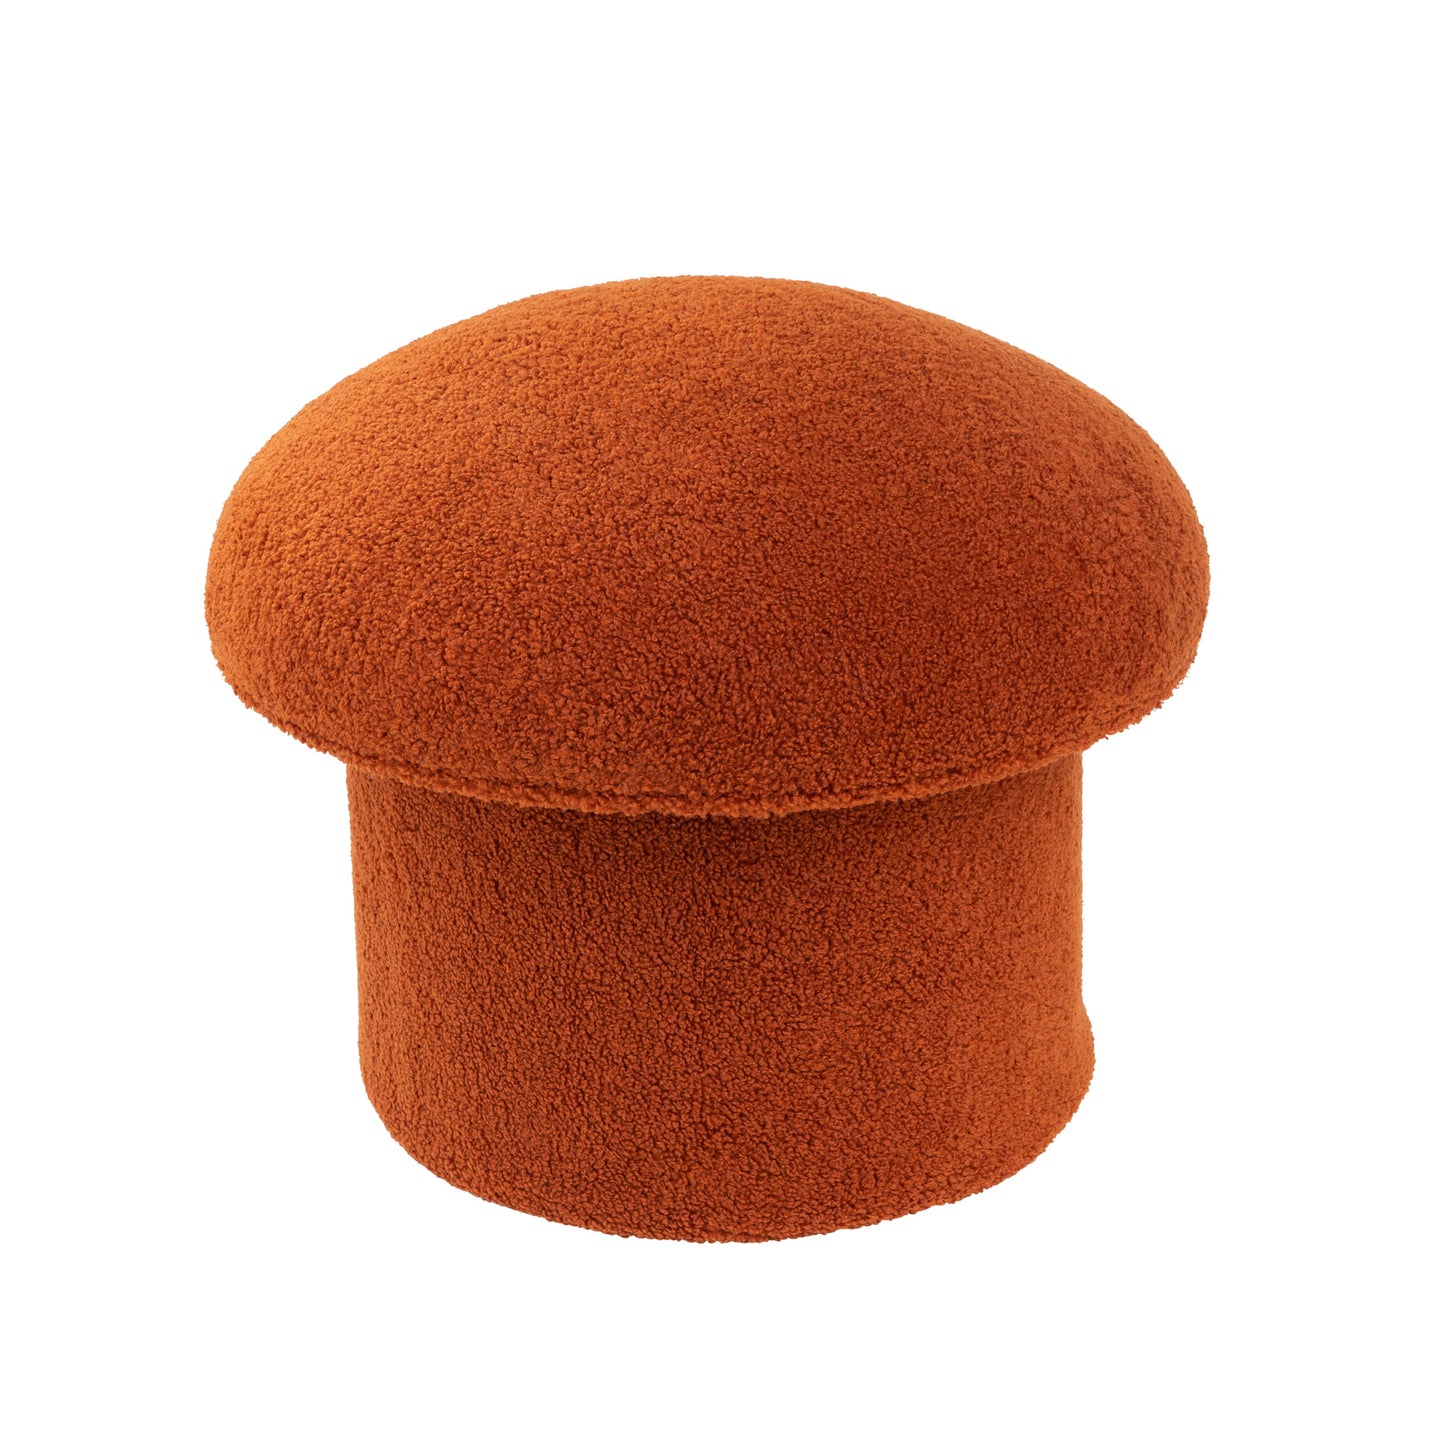 Boucle Mushroom Upholstered Storage Ottoman, Cream